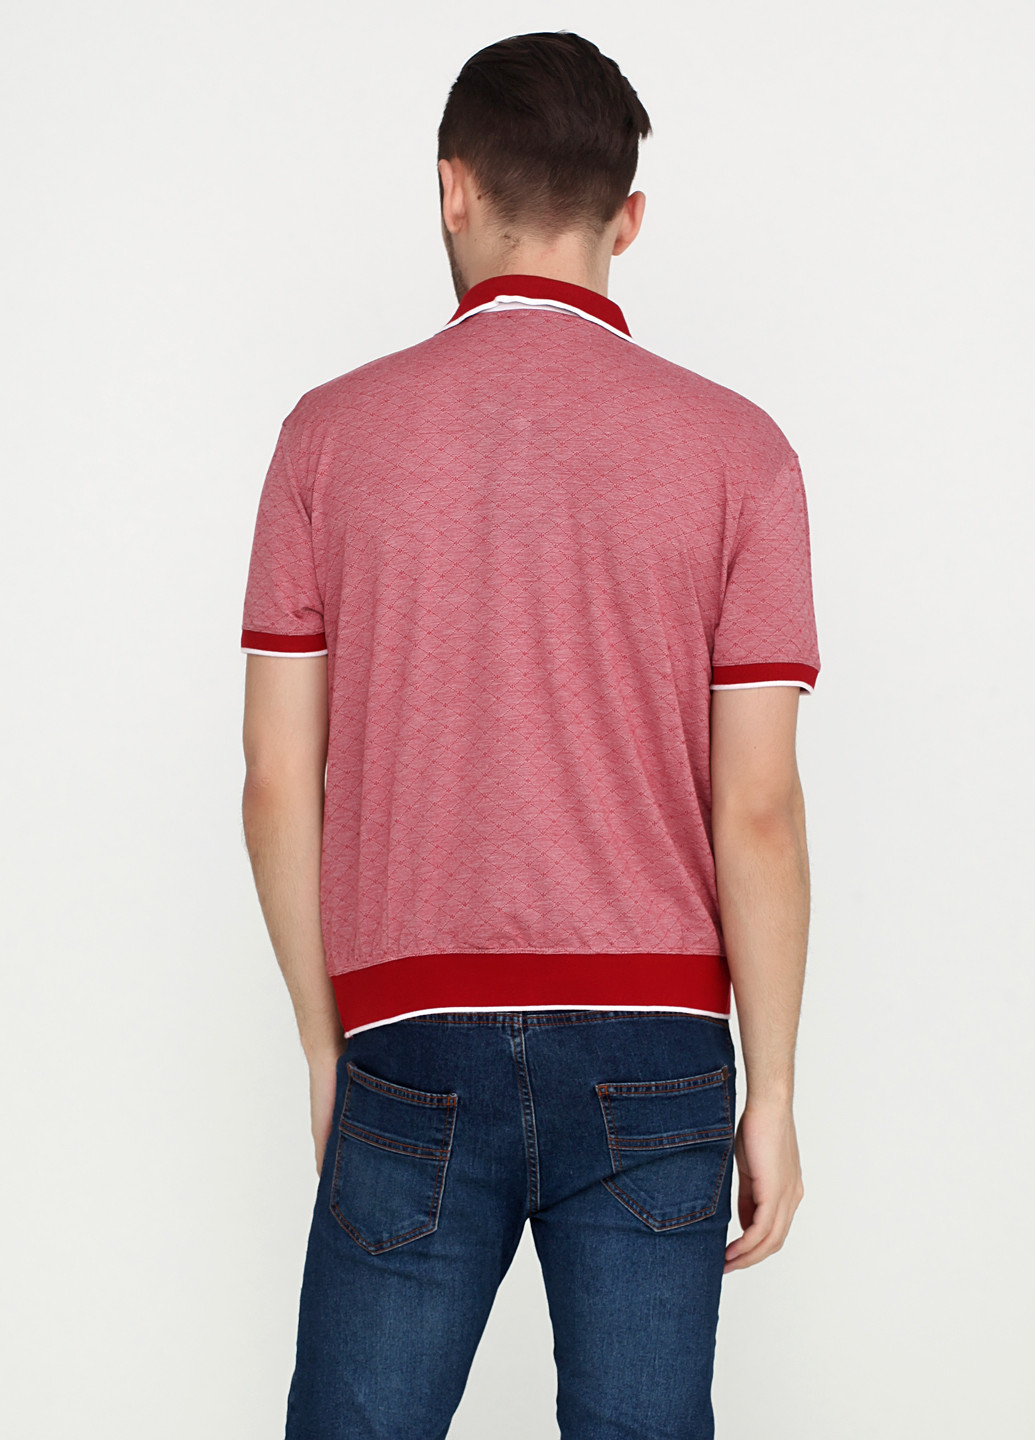 Бордовая футболка-поло для мужчин Mons с геометрическим узором